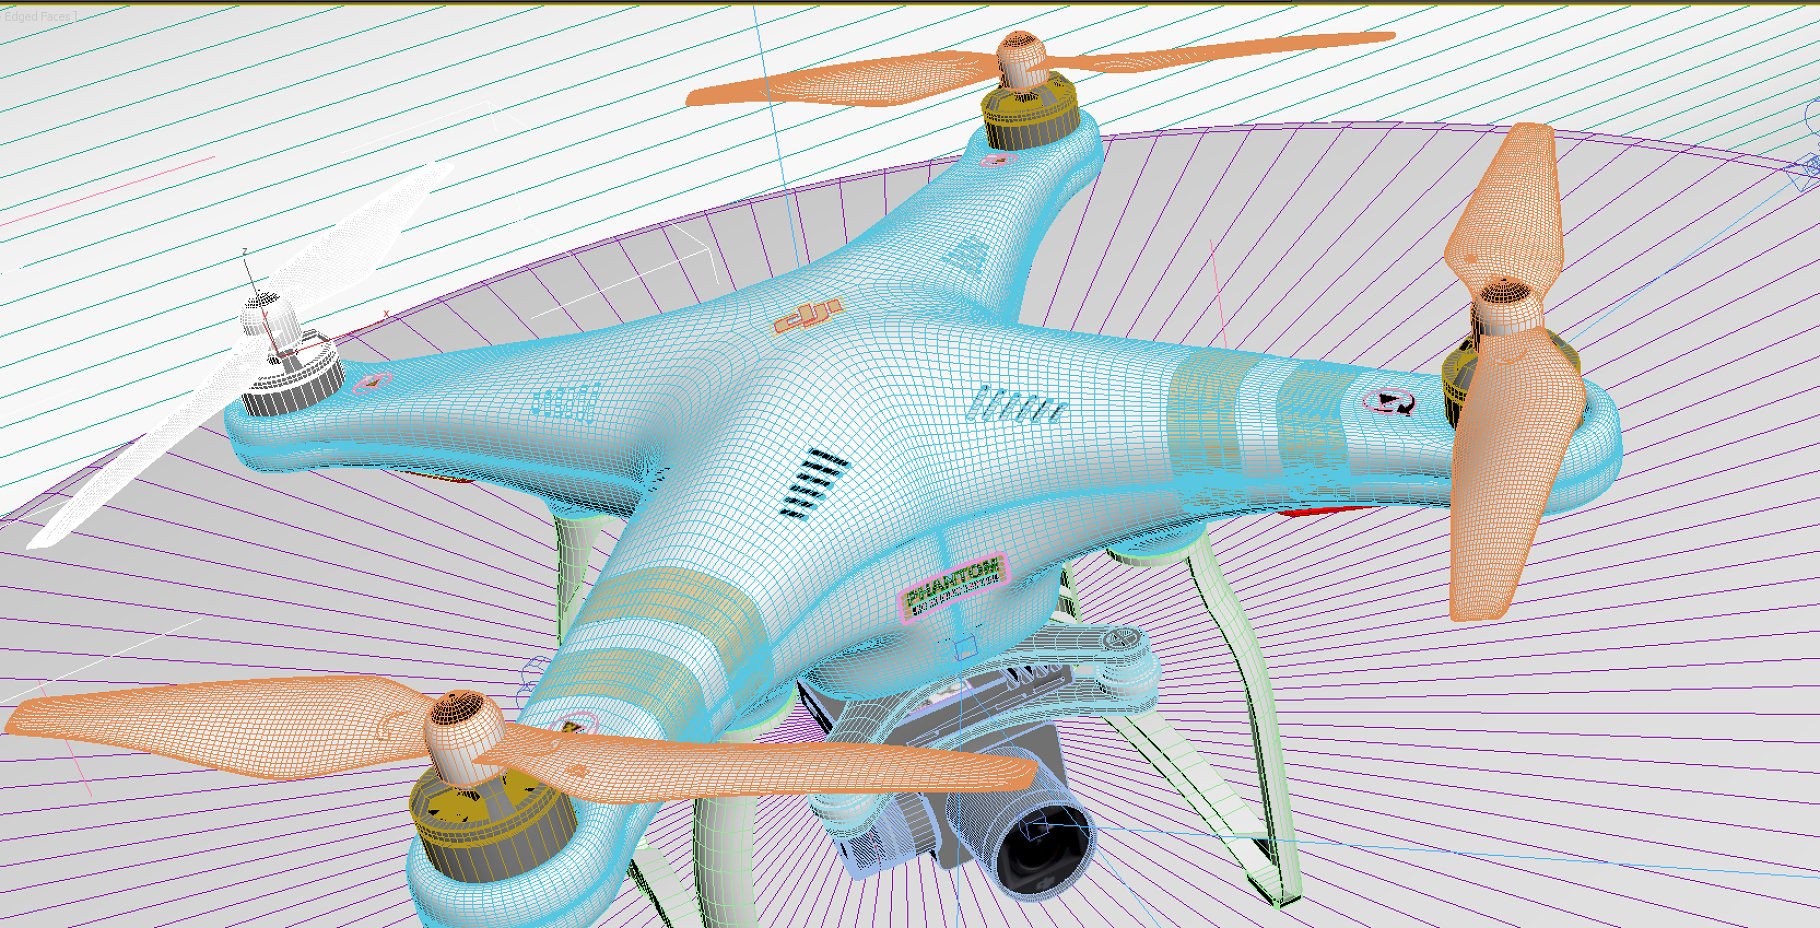 Unique 3d model of a white drone DJI Phantom 3 top view